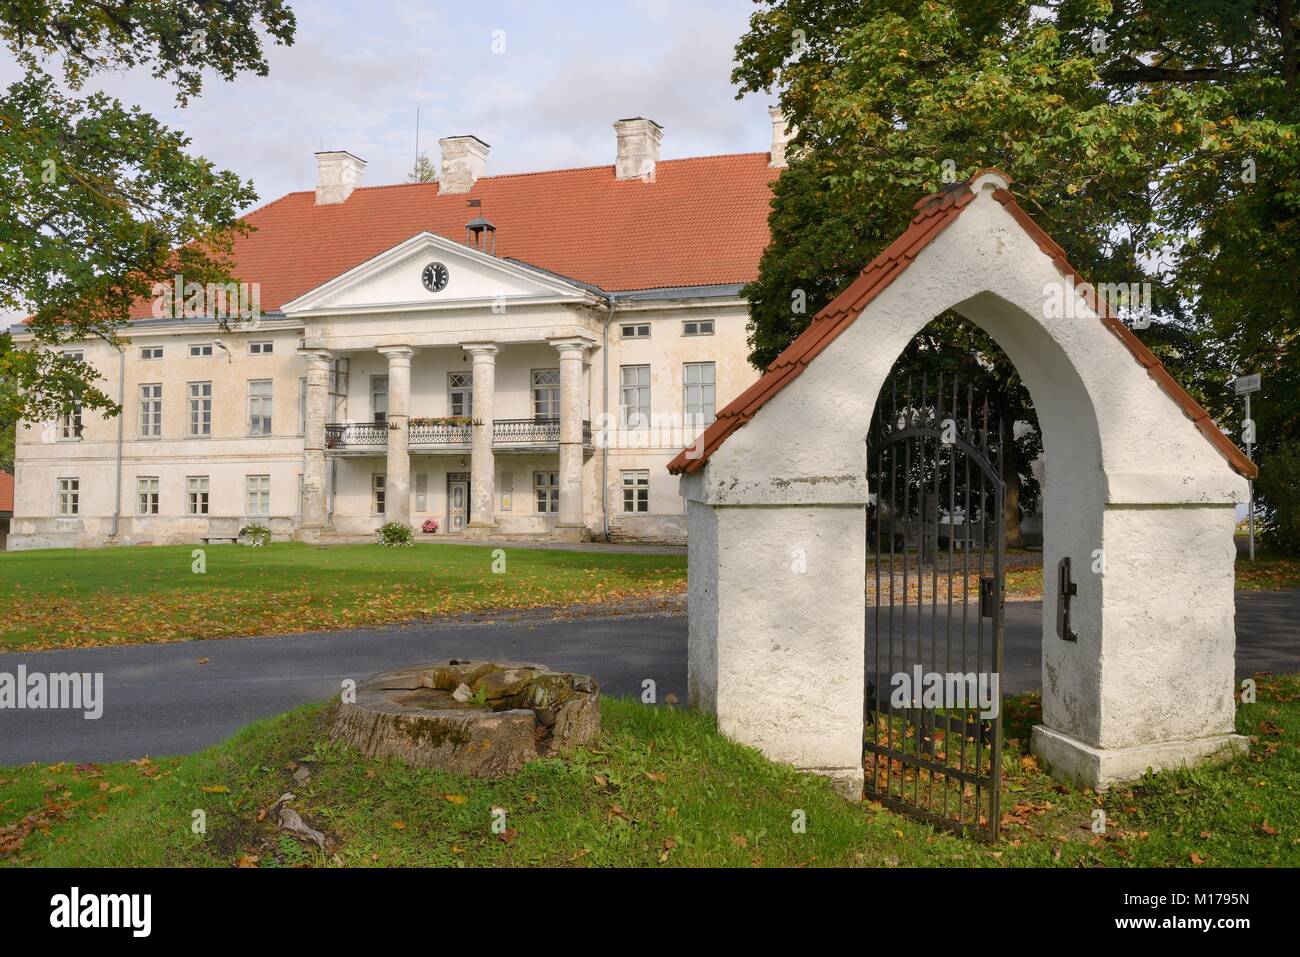 Lihula Manor House e museo, Lihula, Estonia, settembre 2017. Foto Stock